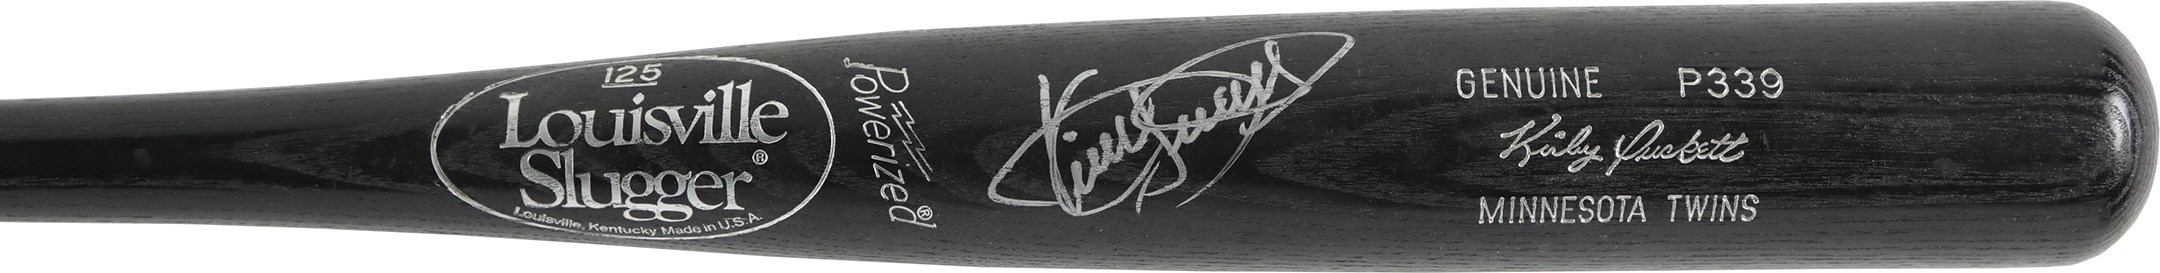 Baseball Autographs - Kirby Puckett Signed Louisville Slugger Model P339 Bat